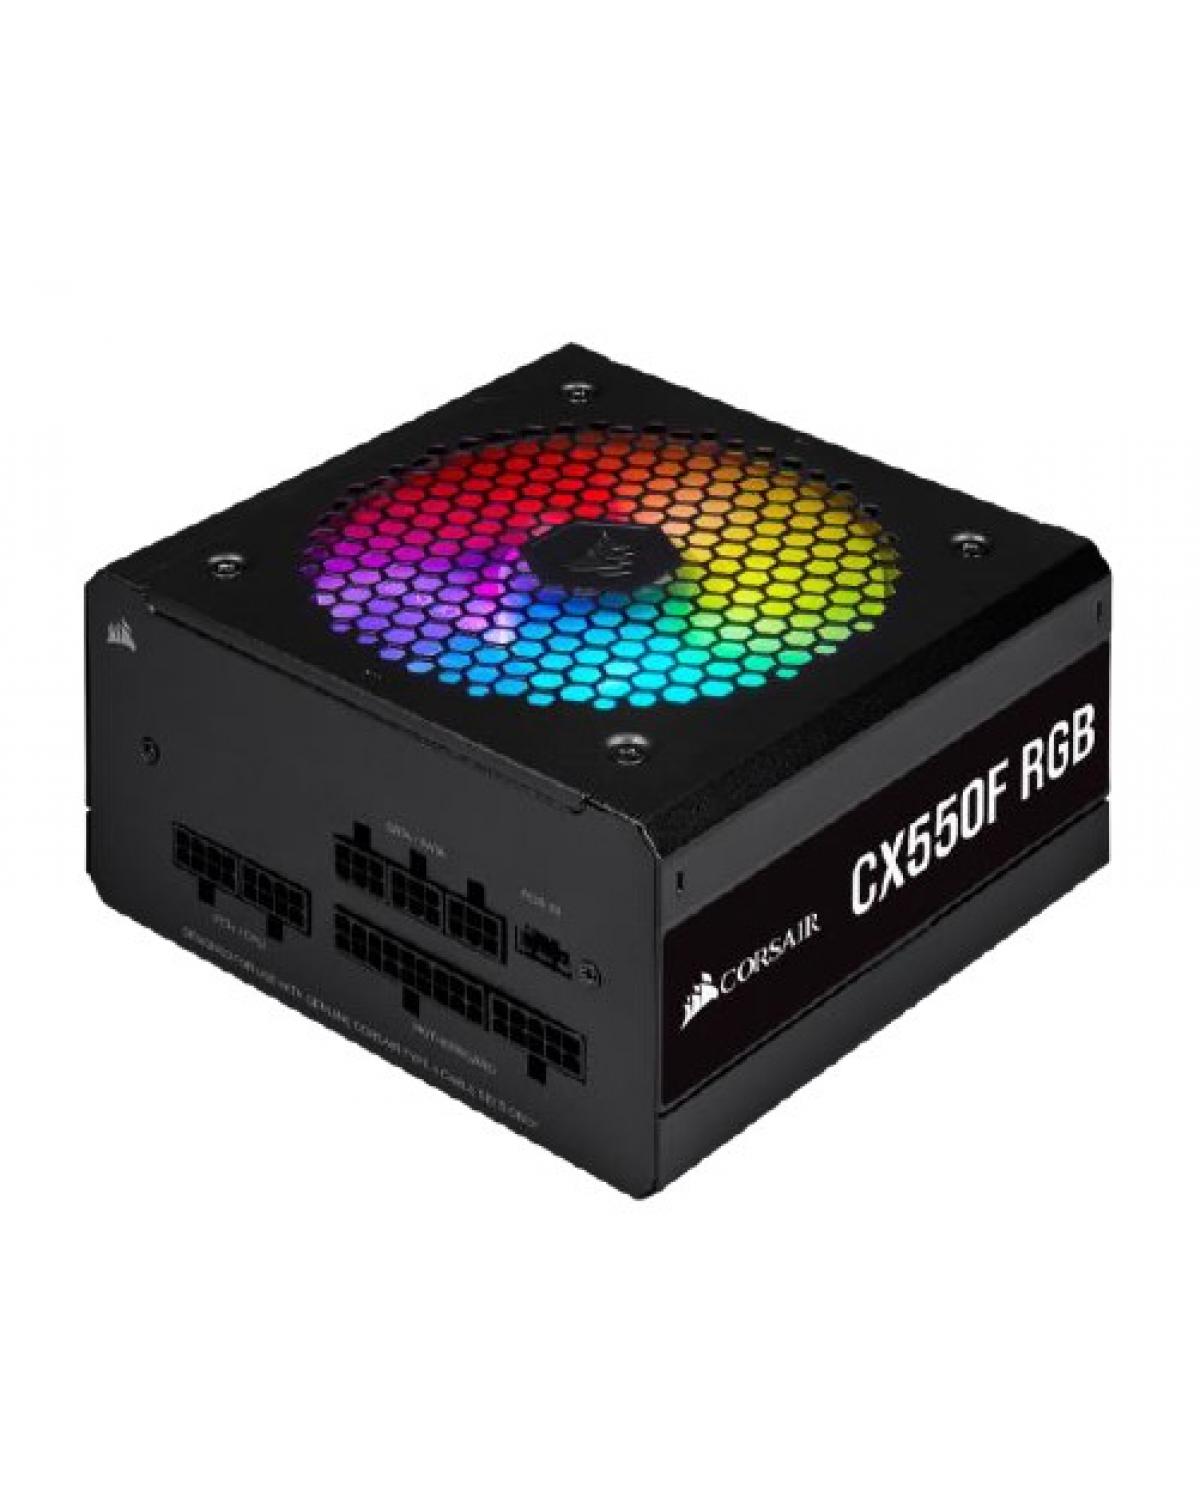 FONTE ATX 550W - CX550F FULL MODULAR - RGB BLACK - 80 PLUS BRONZE - COM CABO DE FORCA - CP-9020216-BR